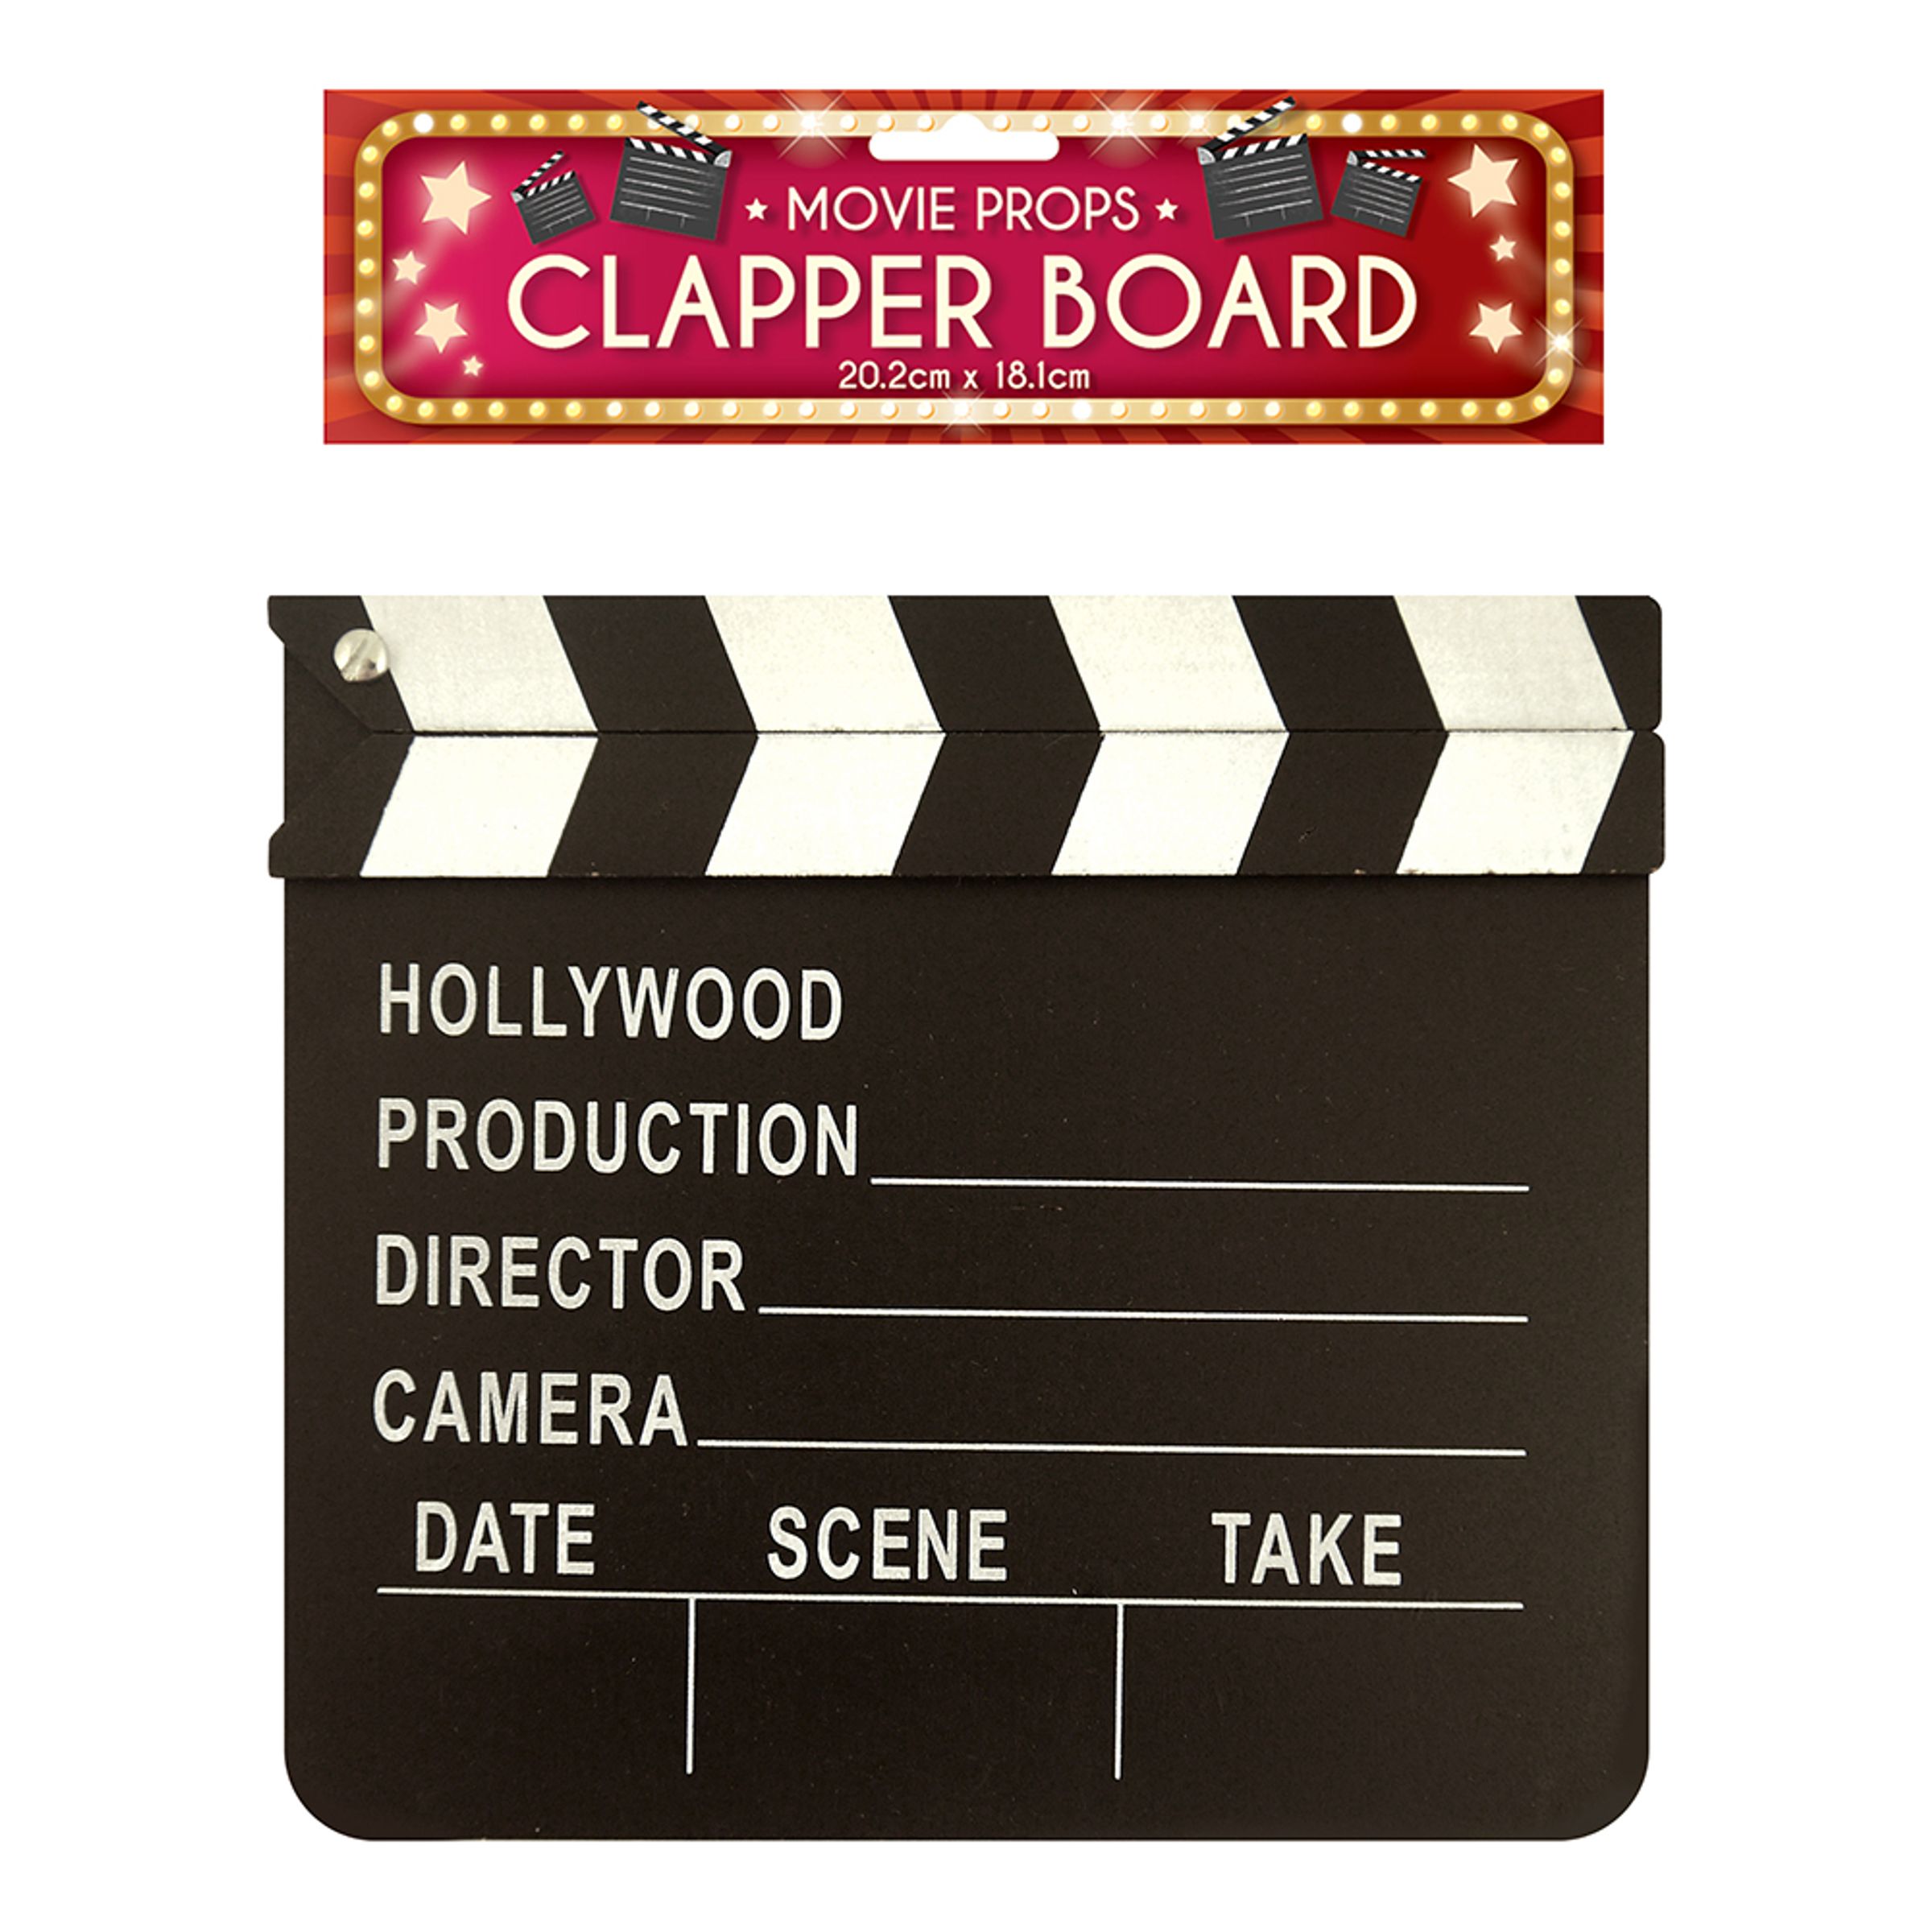 Movie Clapper Board - 18 X 20CM